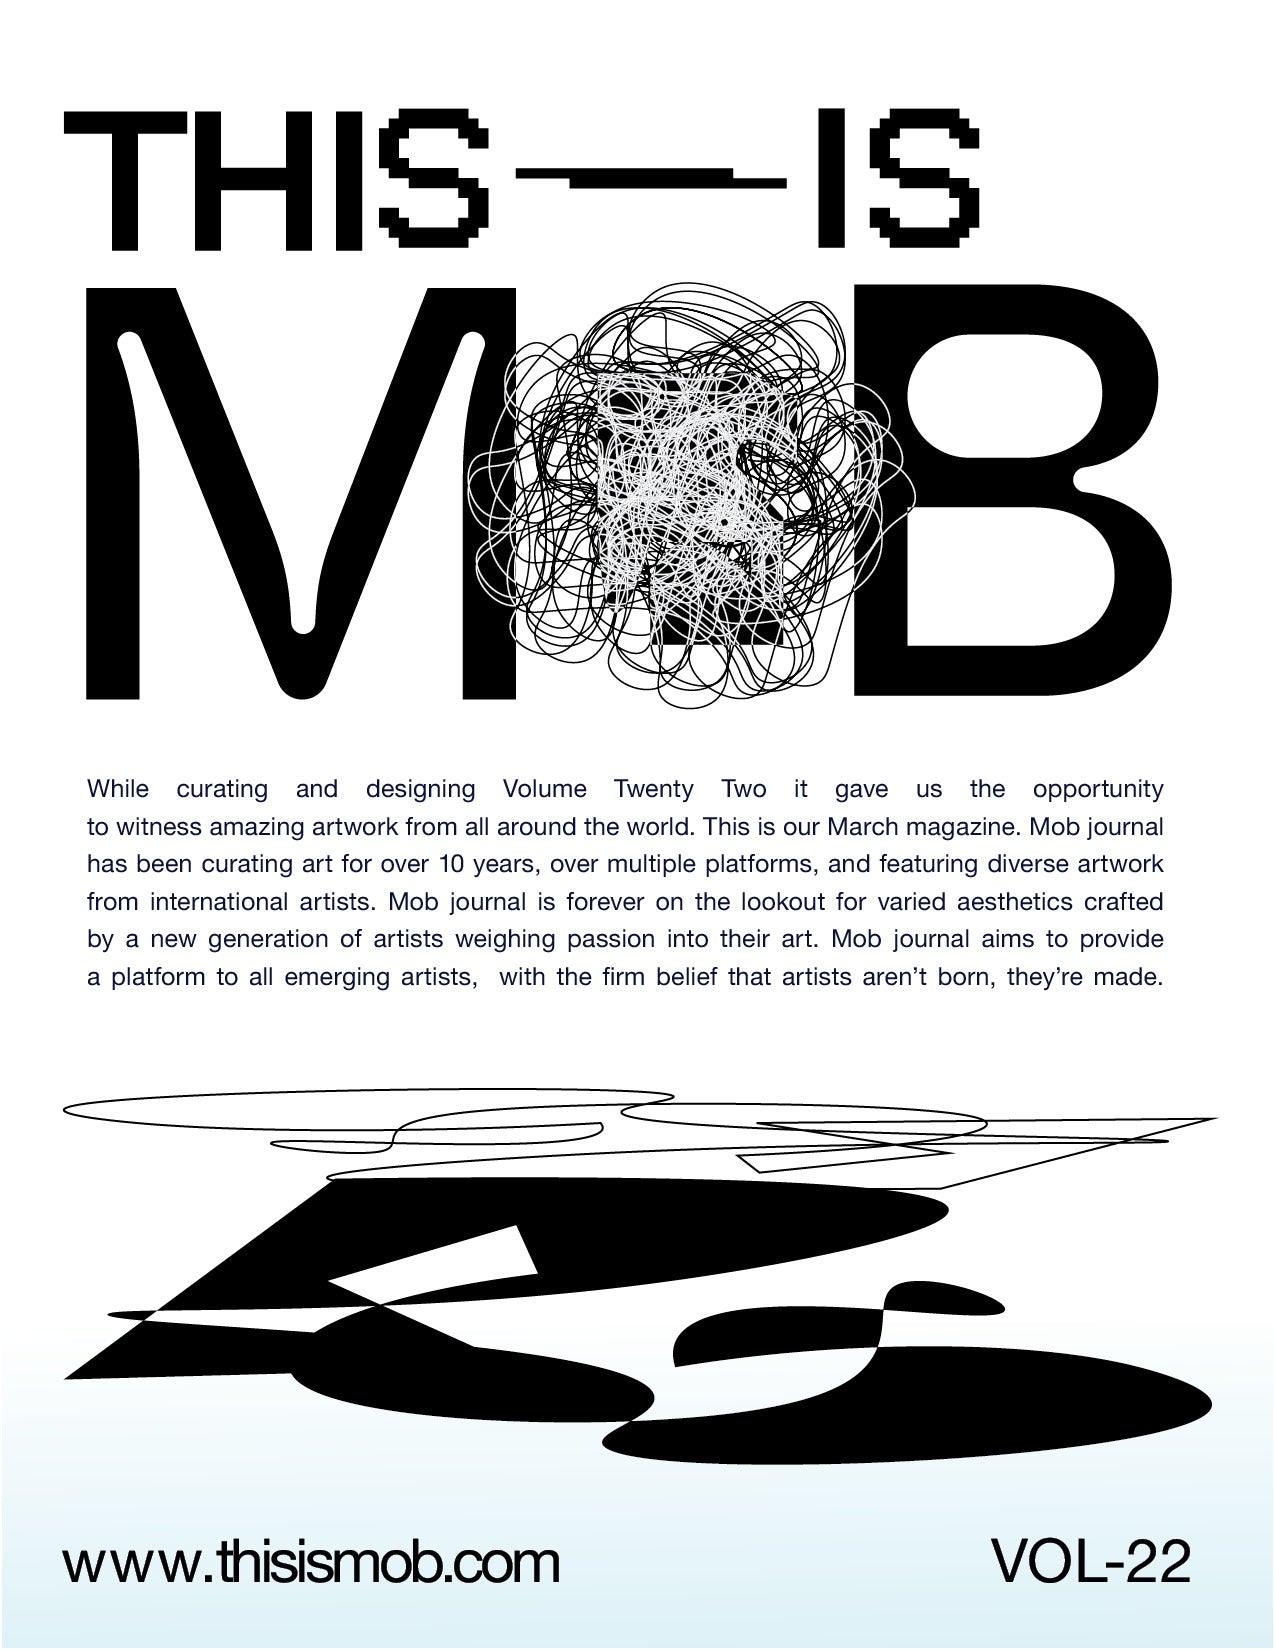 MOB JOURNAL | VOLUME TWENTY TWO | ISSUE #16 - Mob Journal